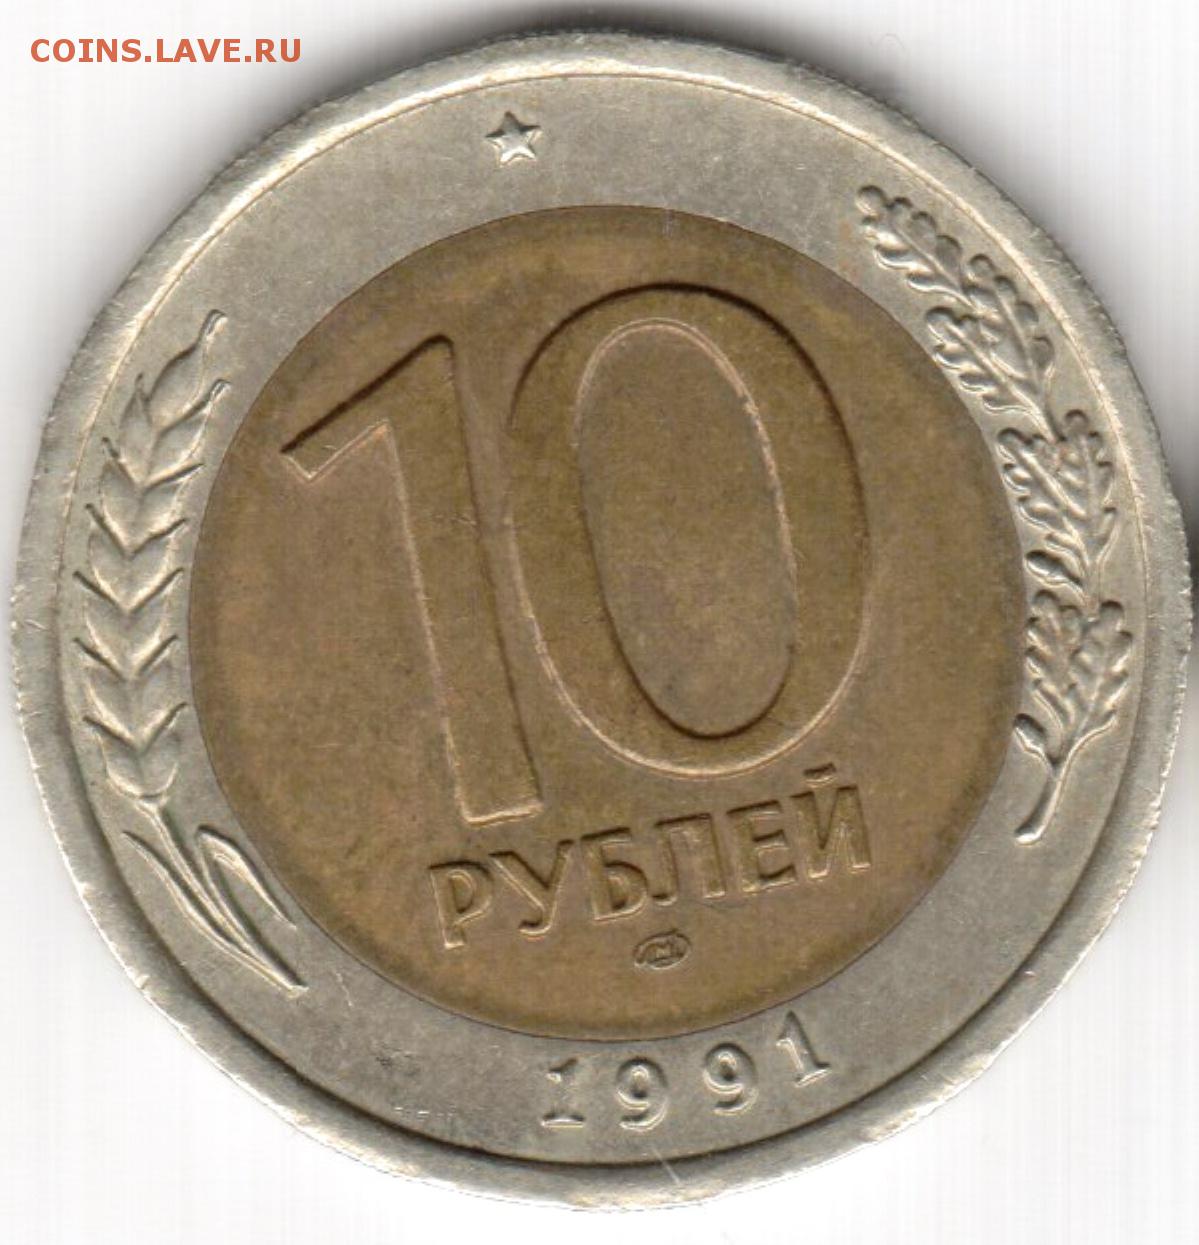 3 рубля 1991 год. Монета 10 рублей 1991 ЛМД. ЛМД И ММД 1991. 10 Рублей 1991 г. ЛМД. Монета 10 рублей ЛМД ММД 1993 года.